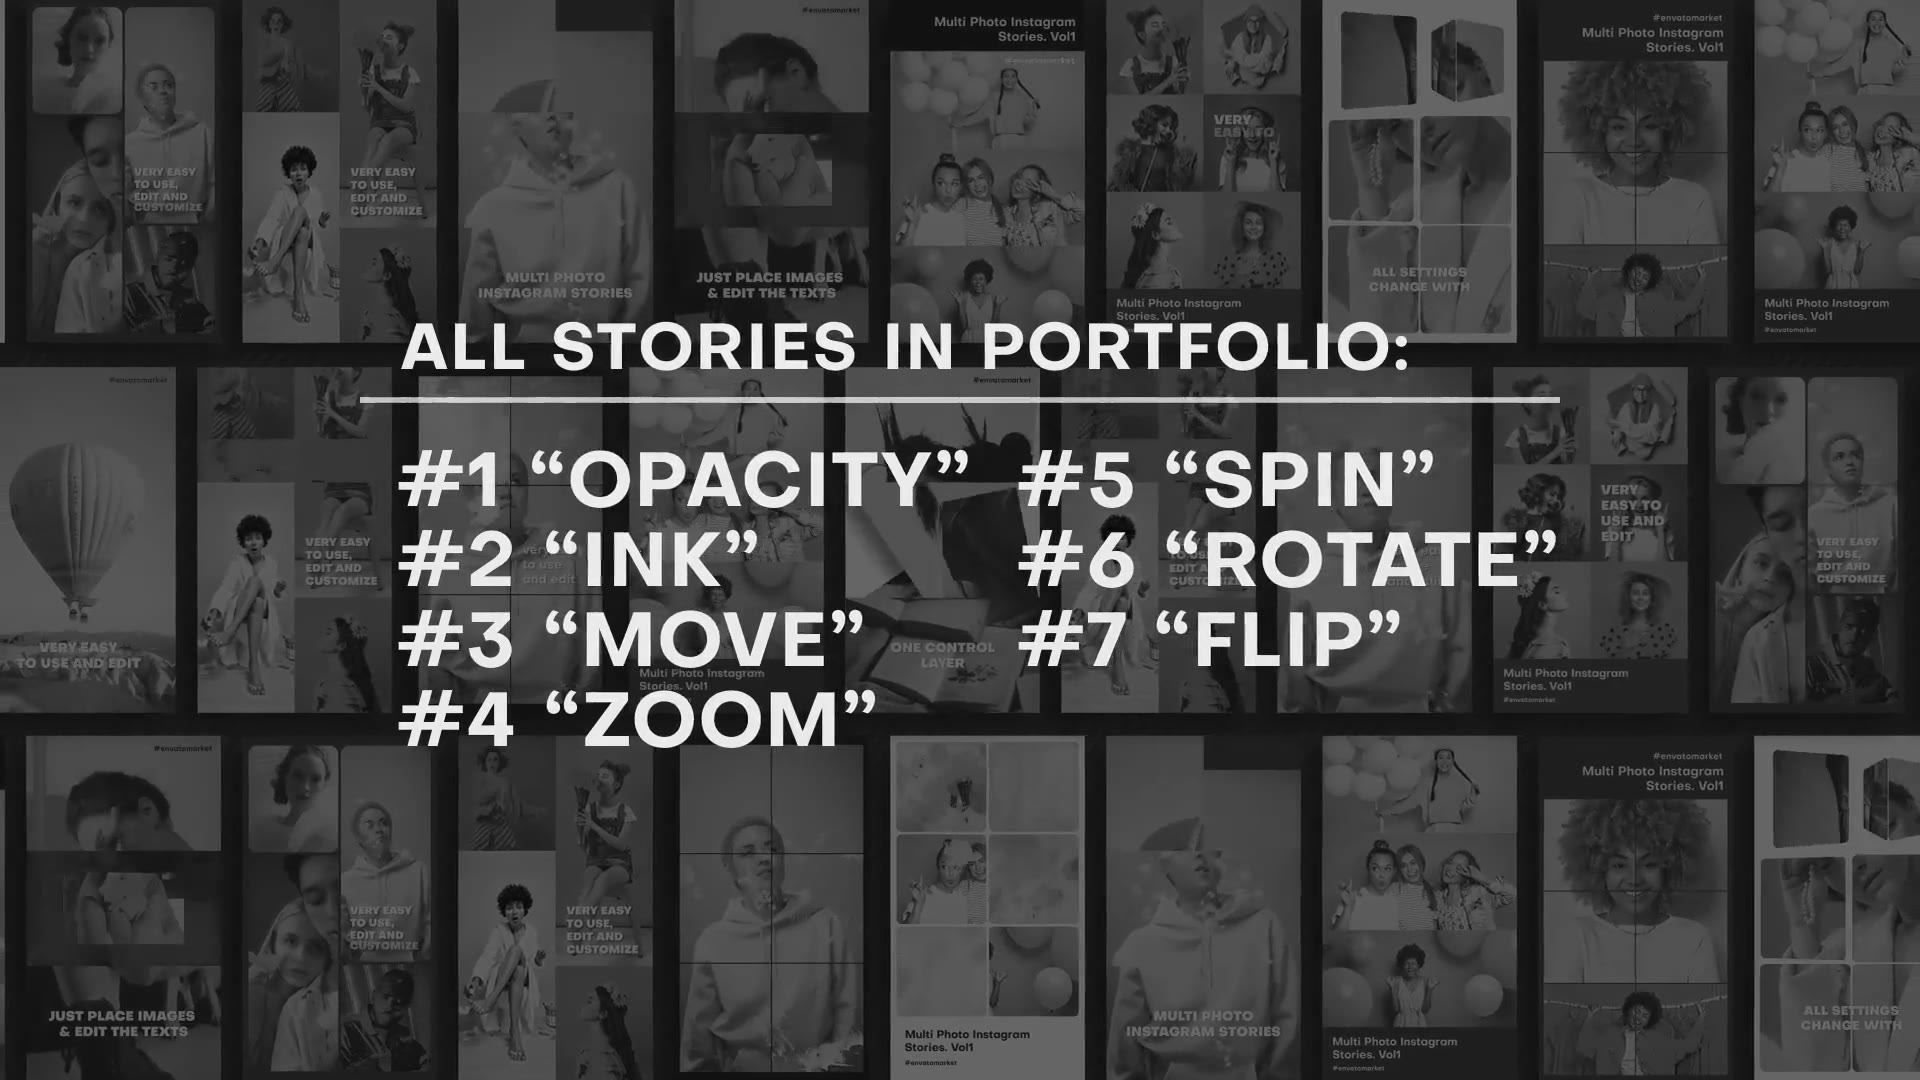 Multi Photo Instagram Stories. Vol1 OPACITY | Premiere Pro Videohive 39357853 Premiere Pro Image 12